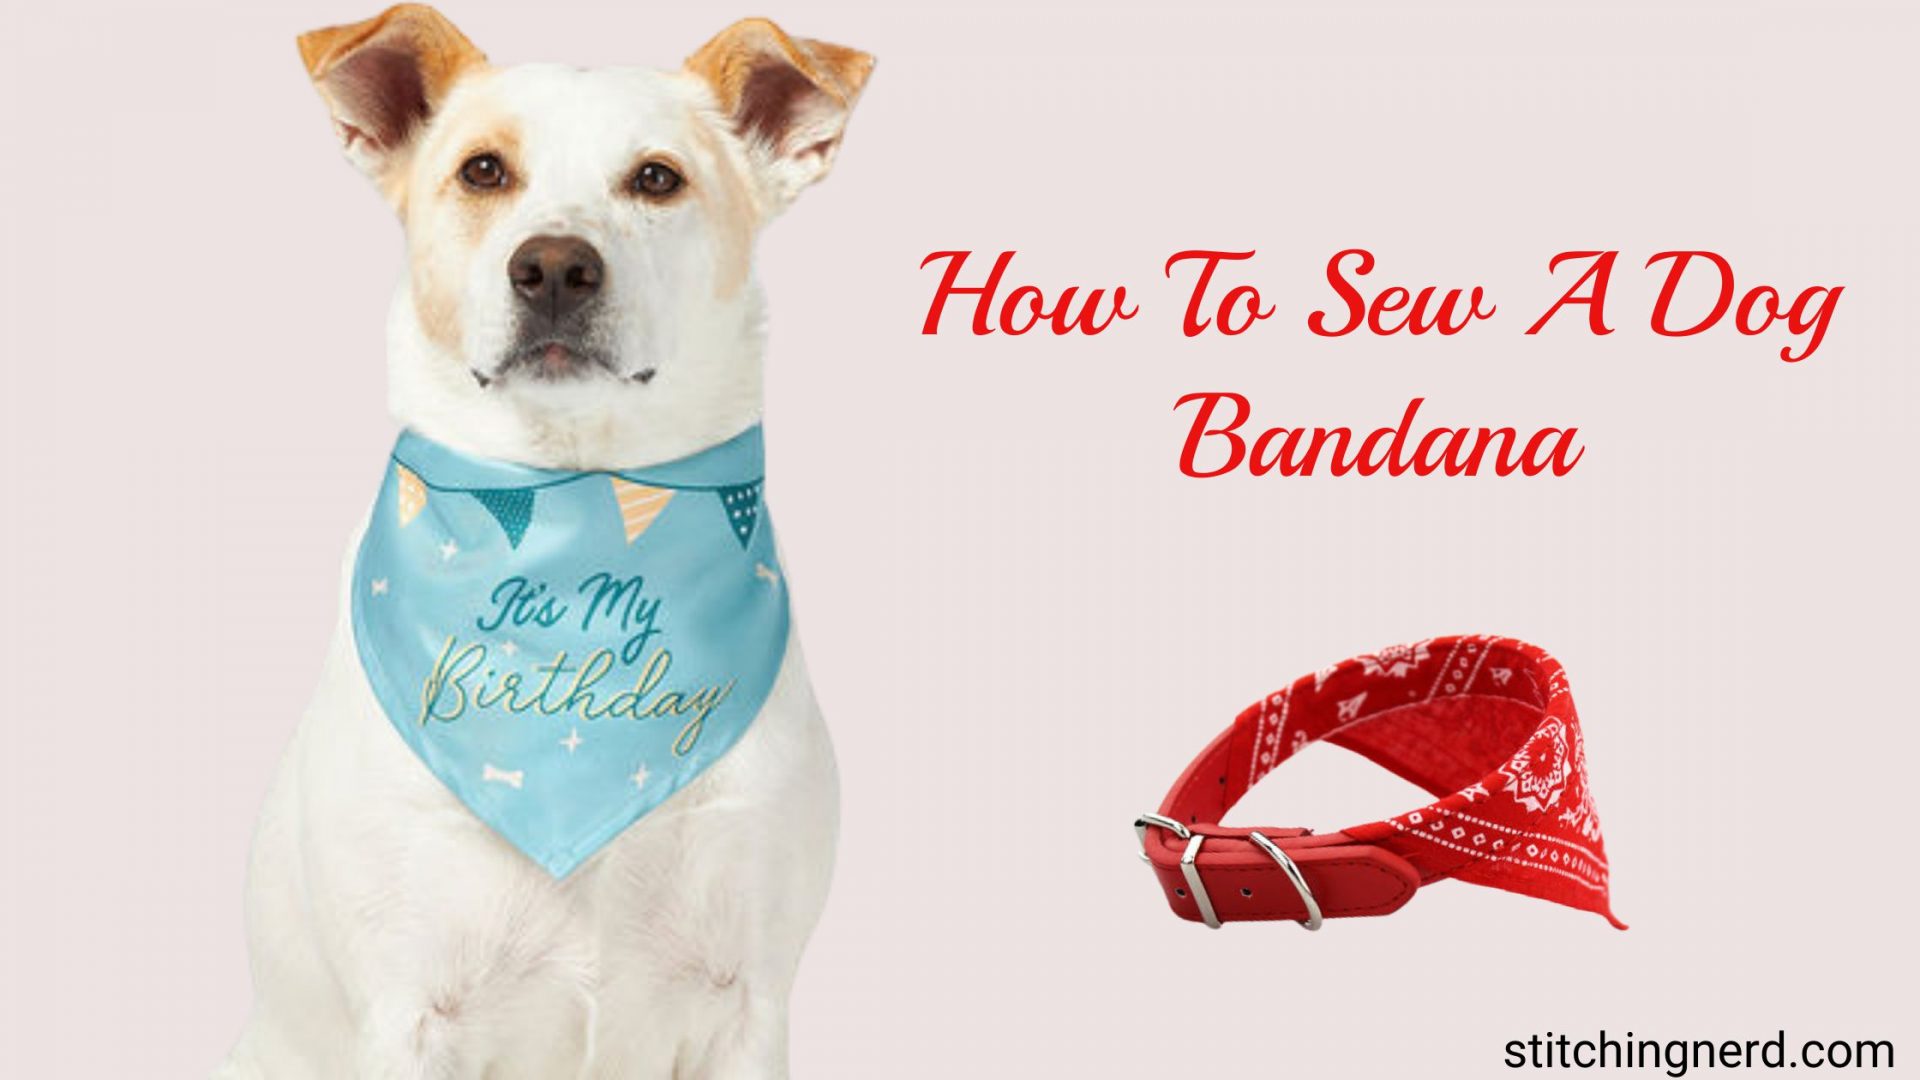 How To Sew a Dog Bandana